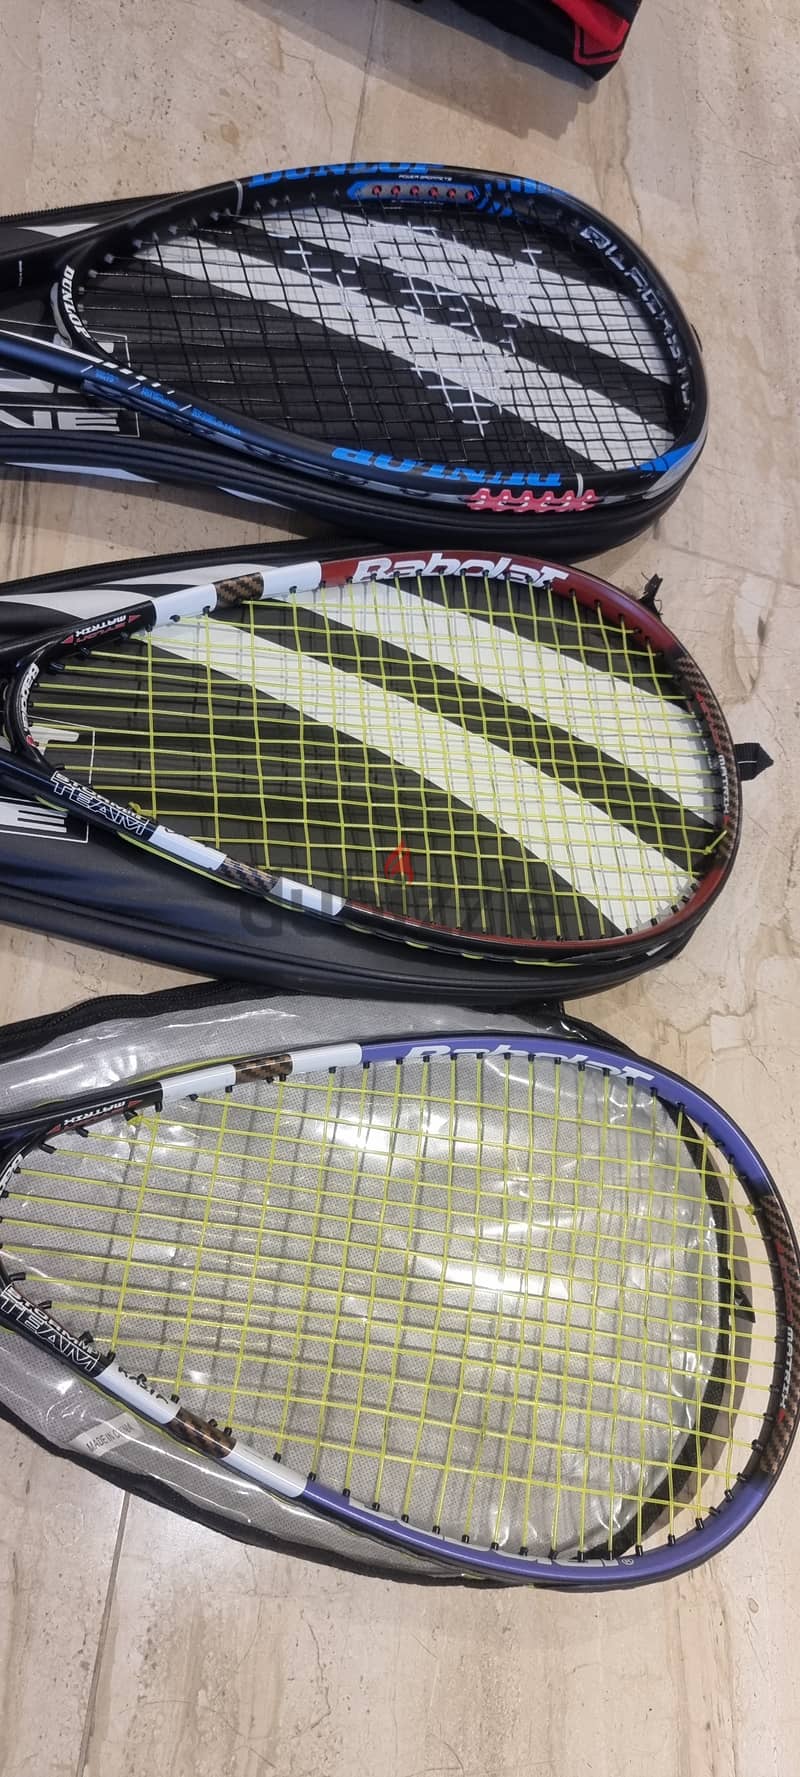 3 squash racquets, Babolat and Dunlop Carbon 3